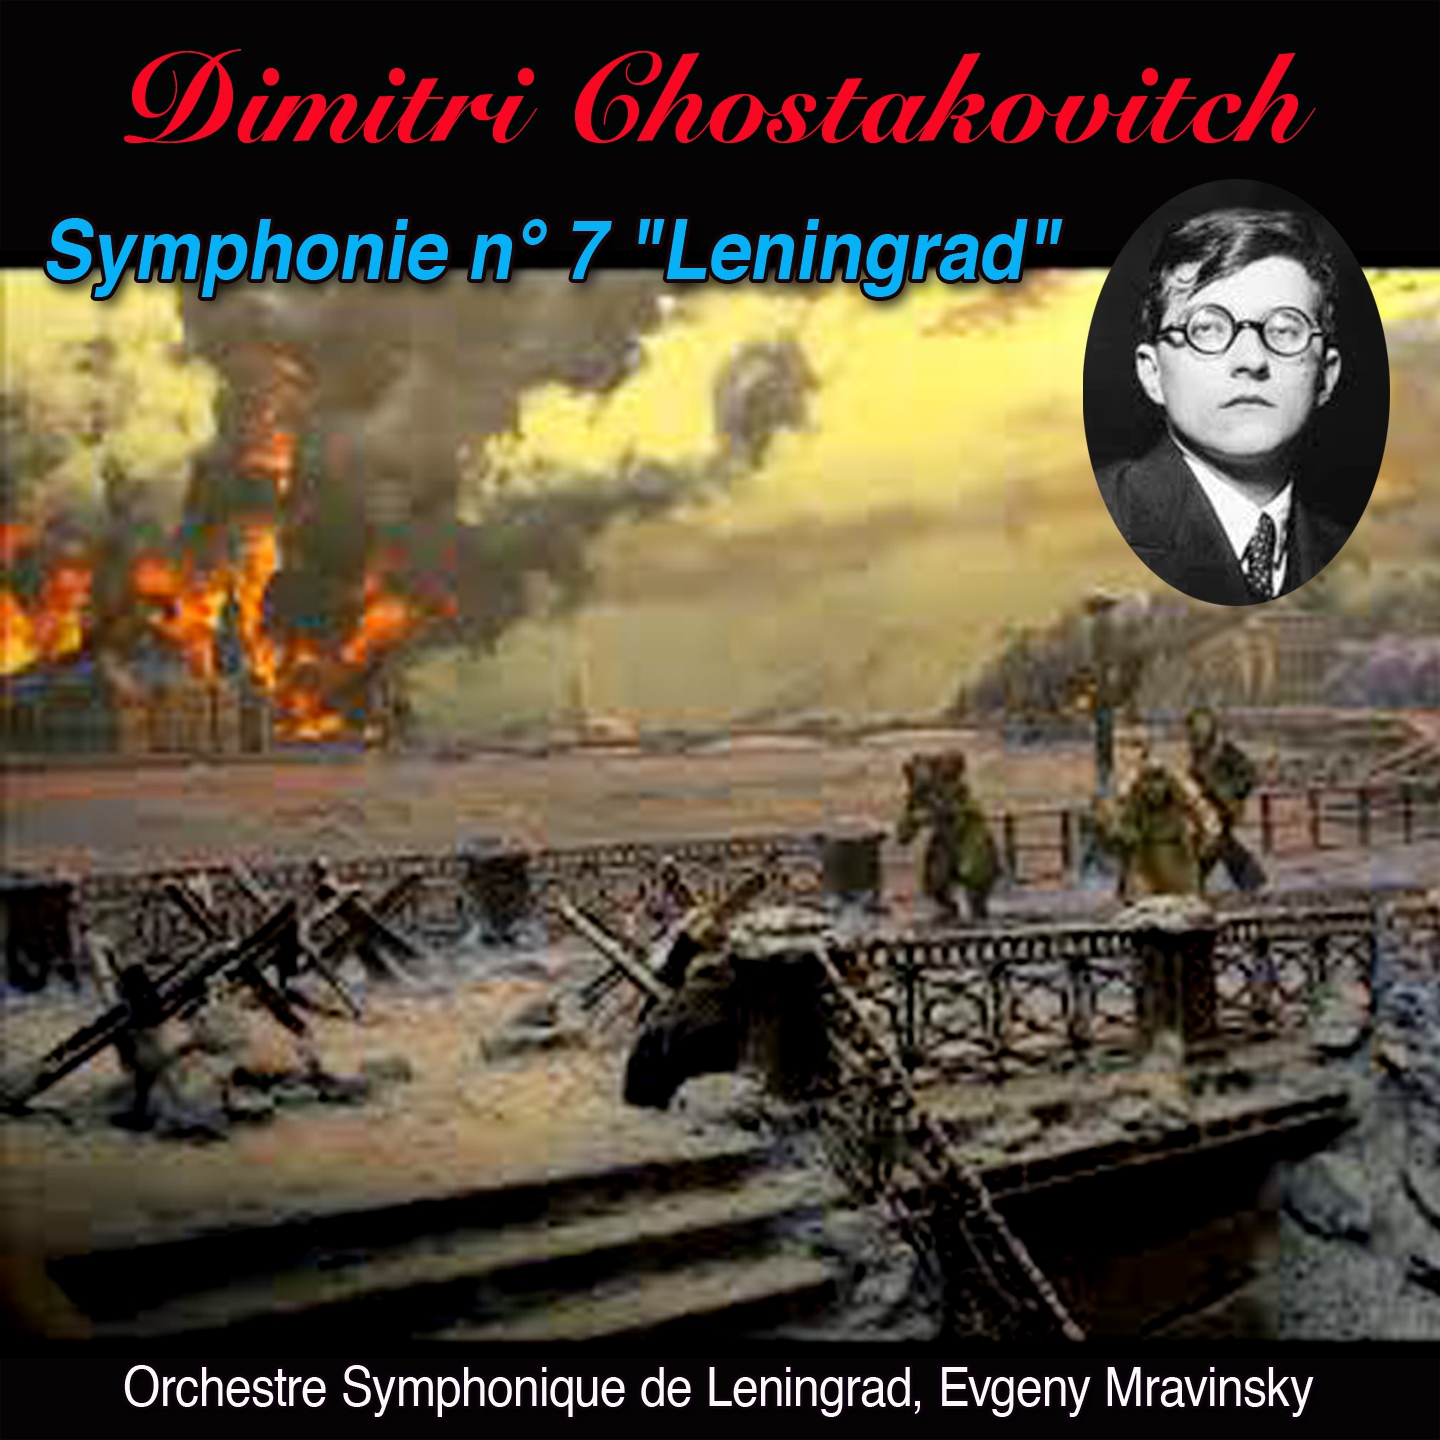 Leningrad allegretto Symphonie n 7 op. 60 en ut majeur " Leningrad"